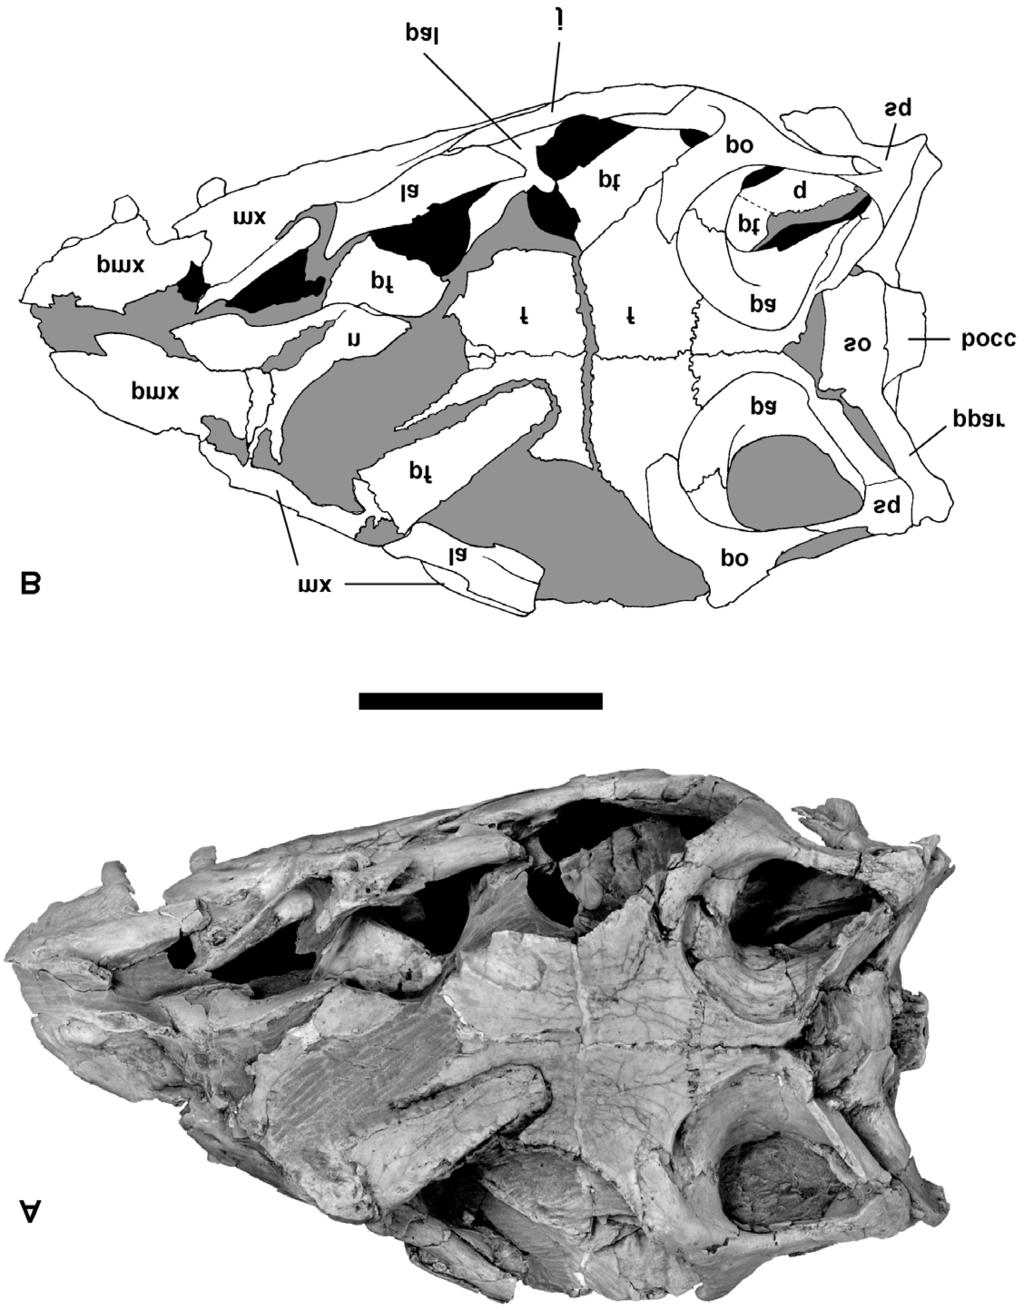 Figure 1. Skull of Massospondylus carinatus (SAM-PK-K1314). A, Photograph of skull in dorsal view. B, Interpretative drawing of the skull.